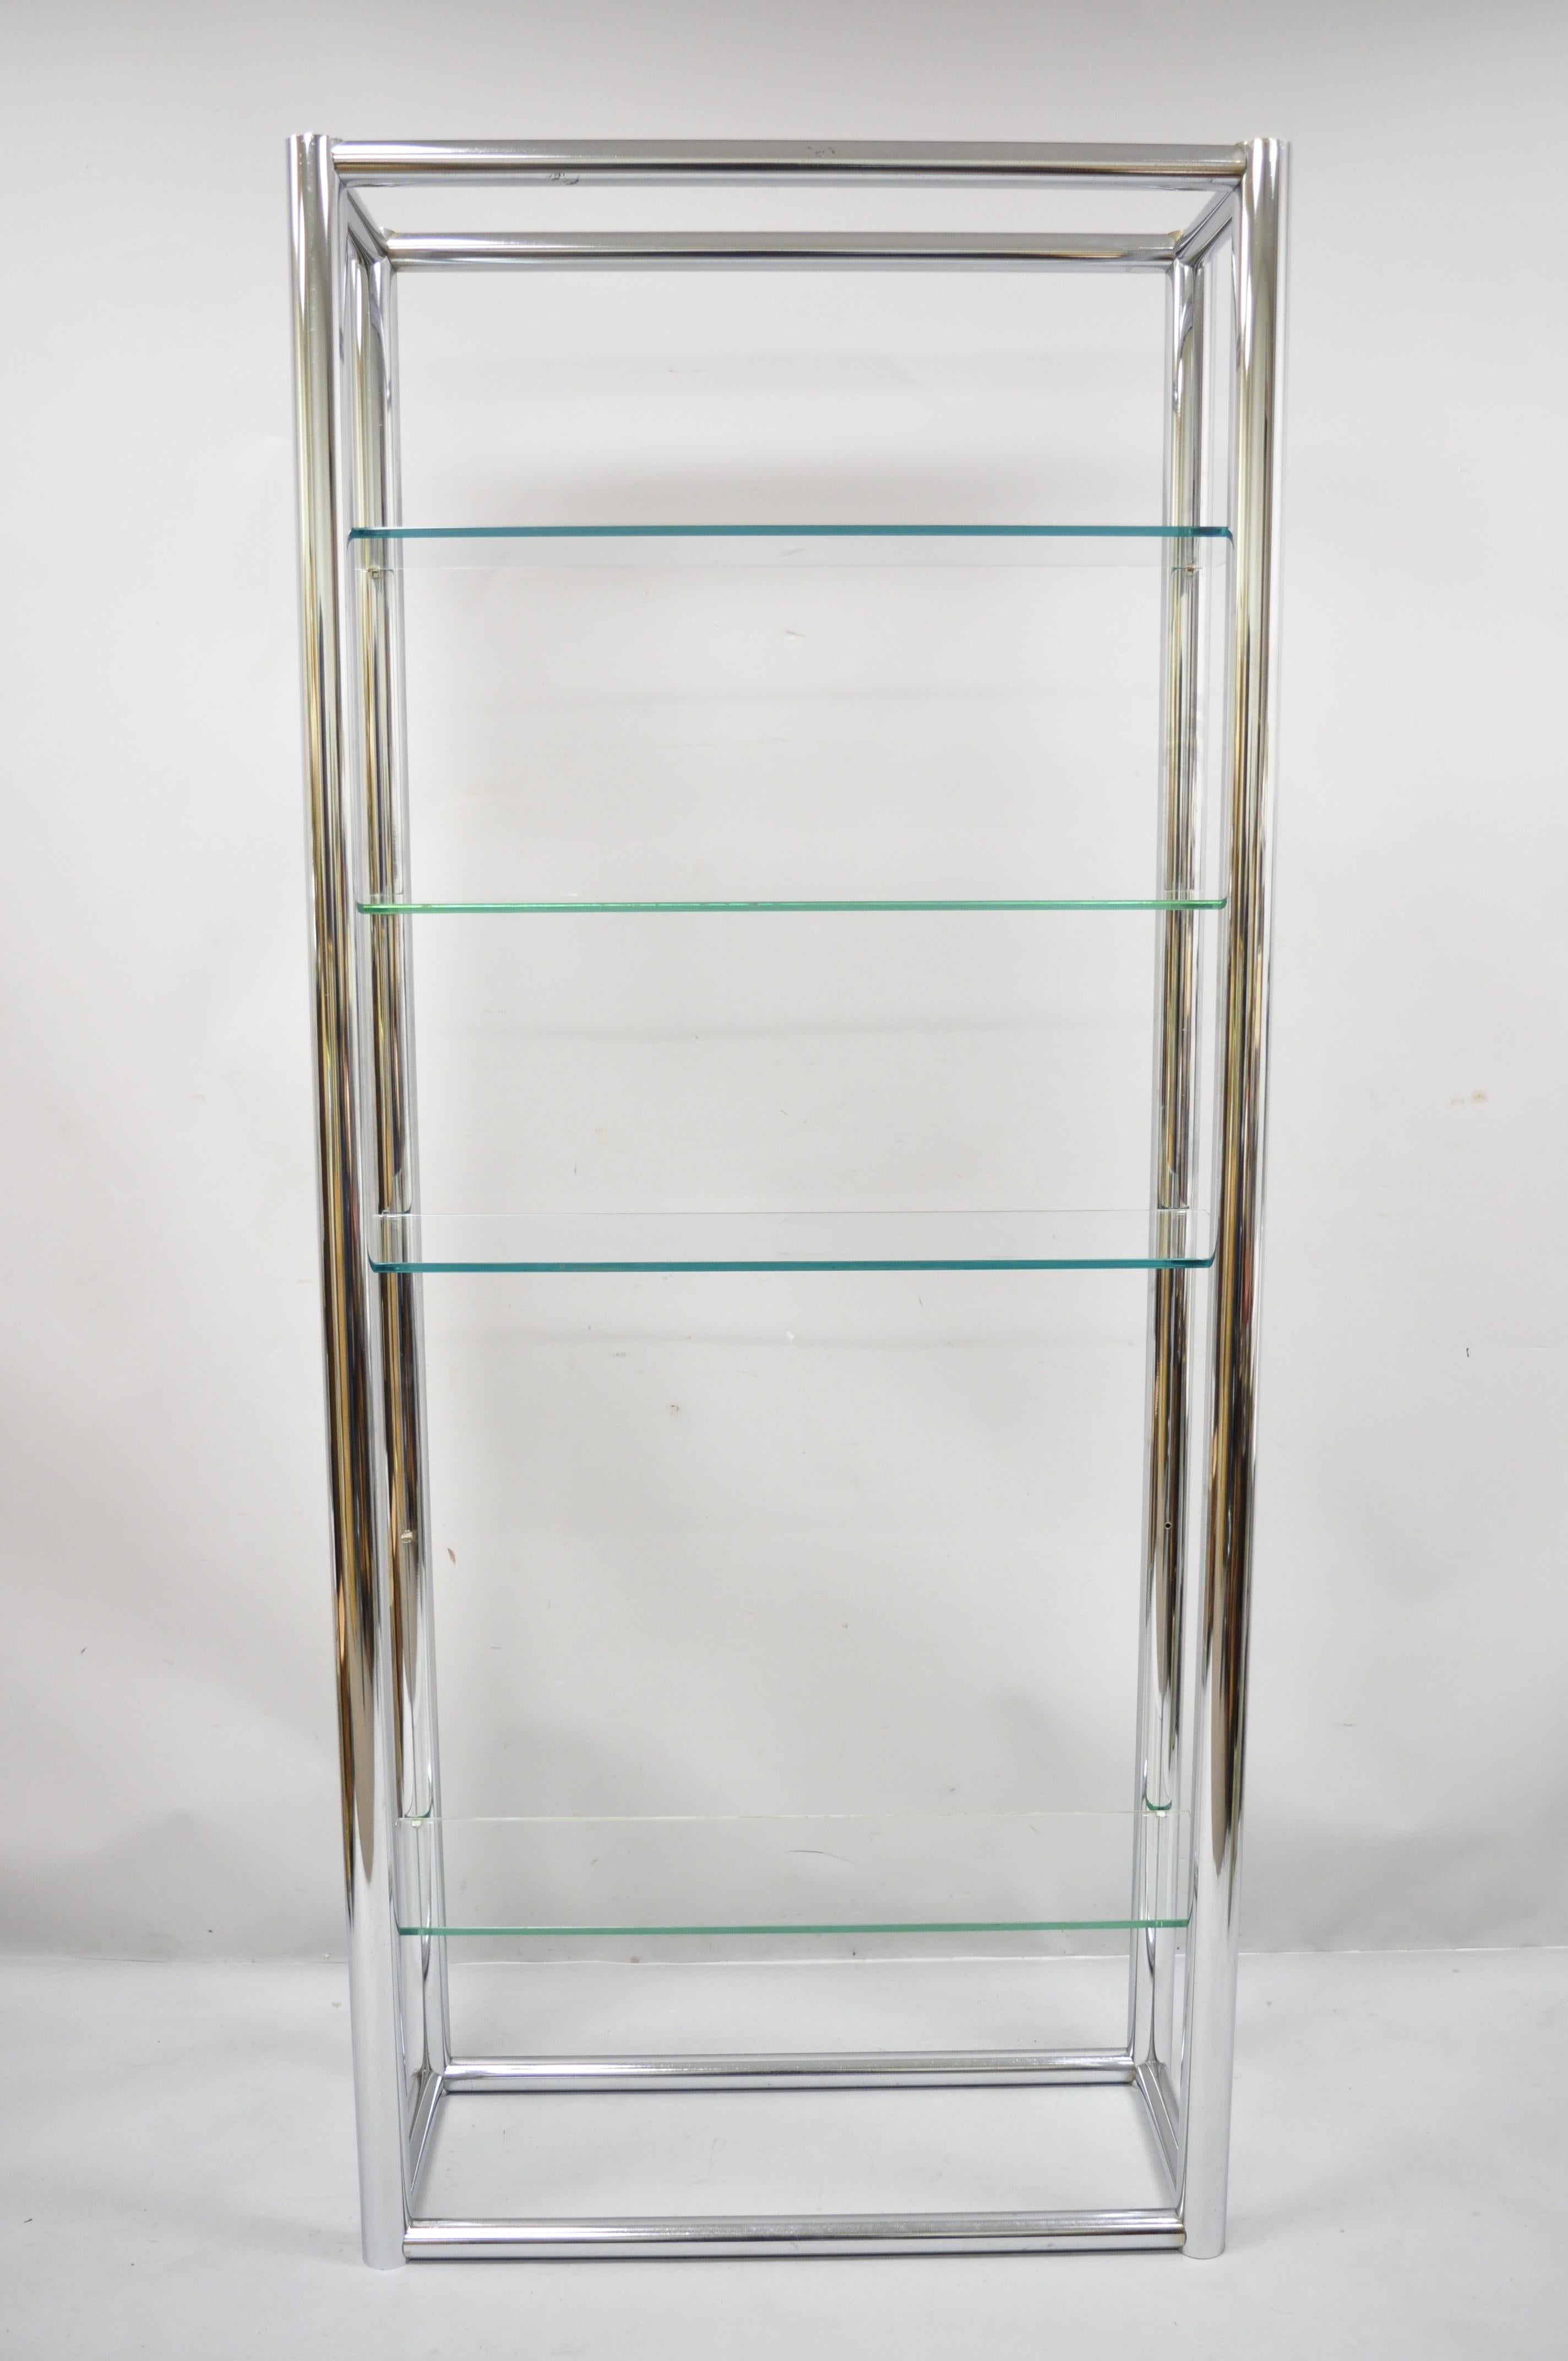 Mid-Century Modern tubular chrome metal étagère bookcase glass shelf Baughman style. Item features tubular chrome metal frame, 4 glass shelves, very nice vintage item, great style and form, Circa 1970s. Measurements: 78